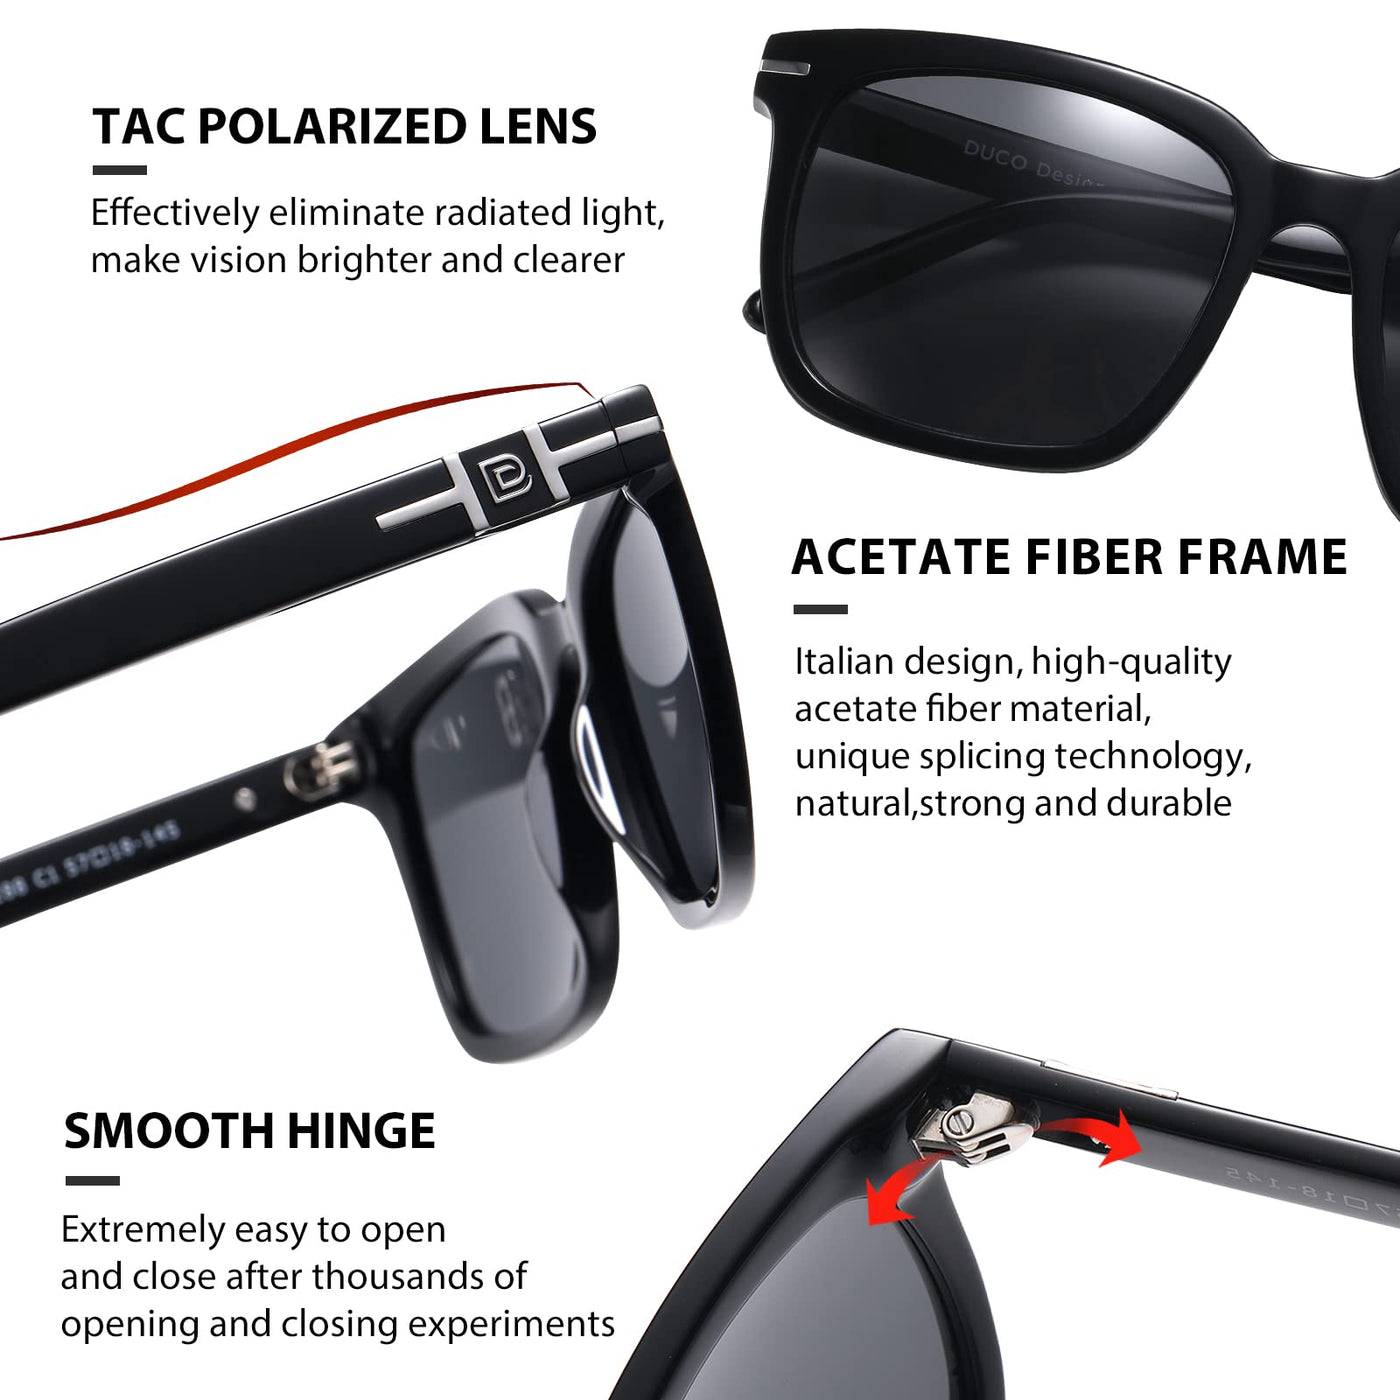 DUCO Polarized Sunglasses Designer Acetate Frame UV Protection Lens DC8288